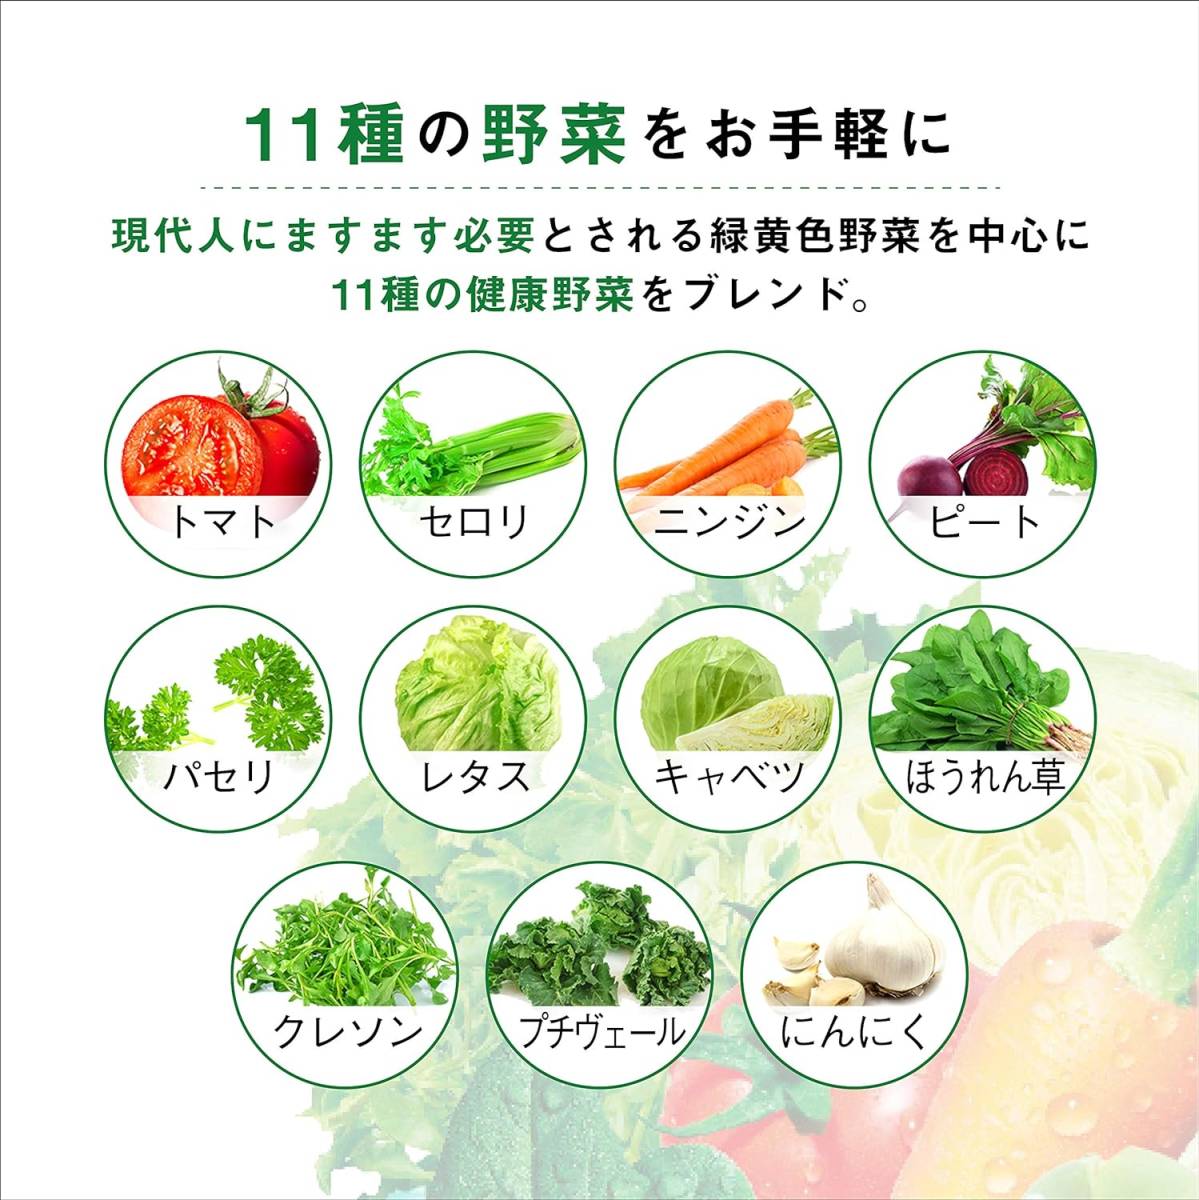  lemon 160 gram (x 30) basket me vegetable juice salt no addition ( can ) 160g×30ps.@[ functionality display food ]